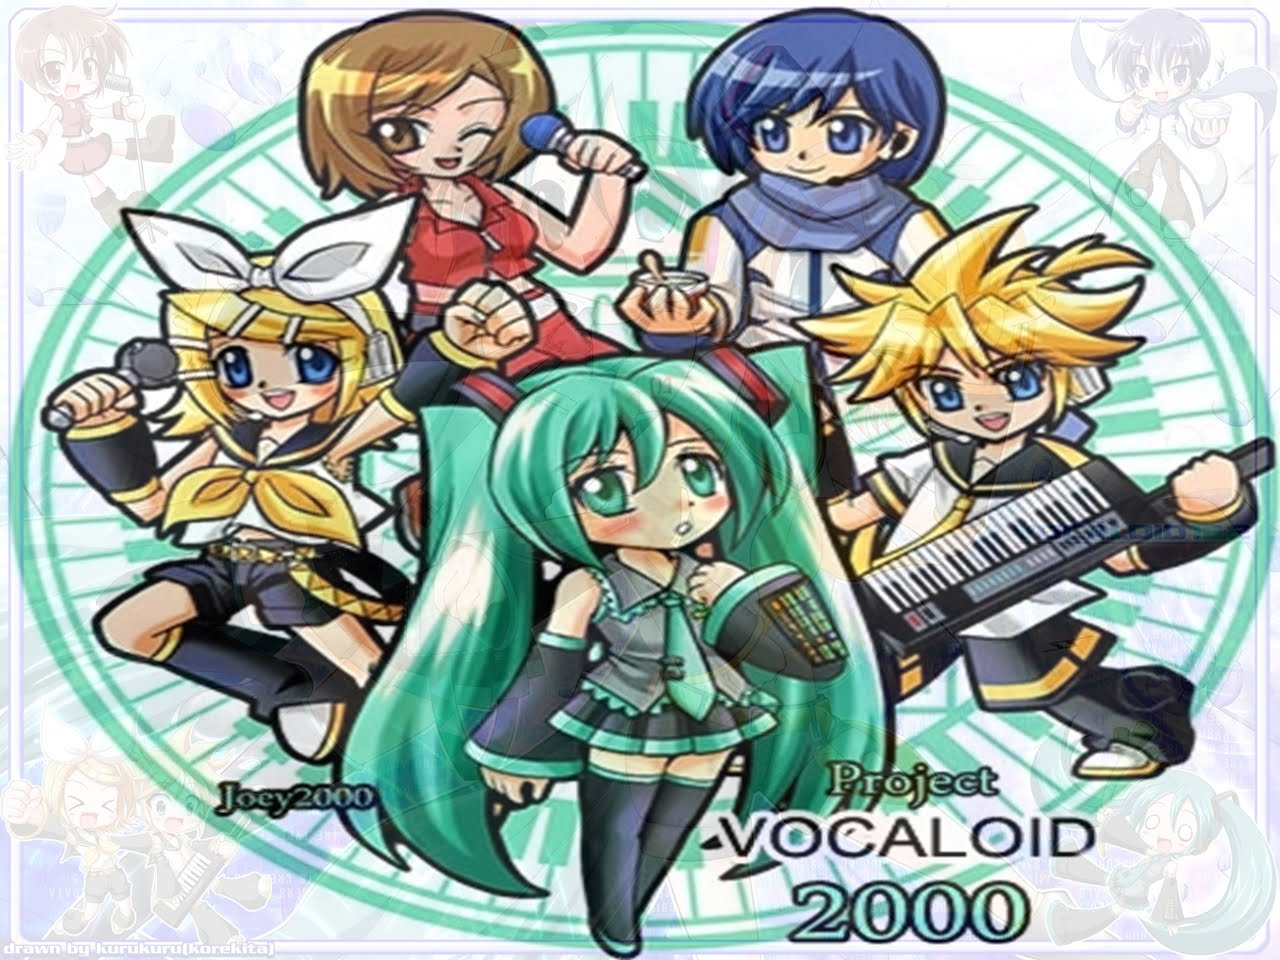 Project Vocaloid 2000